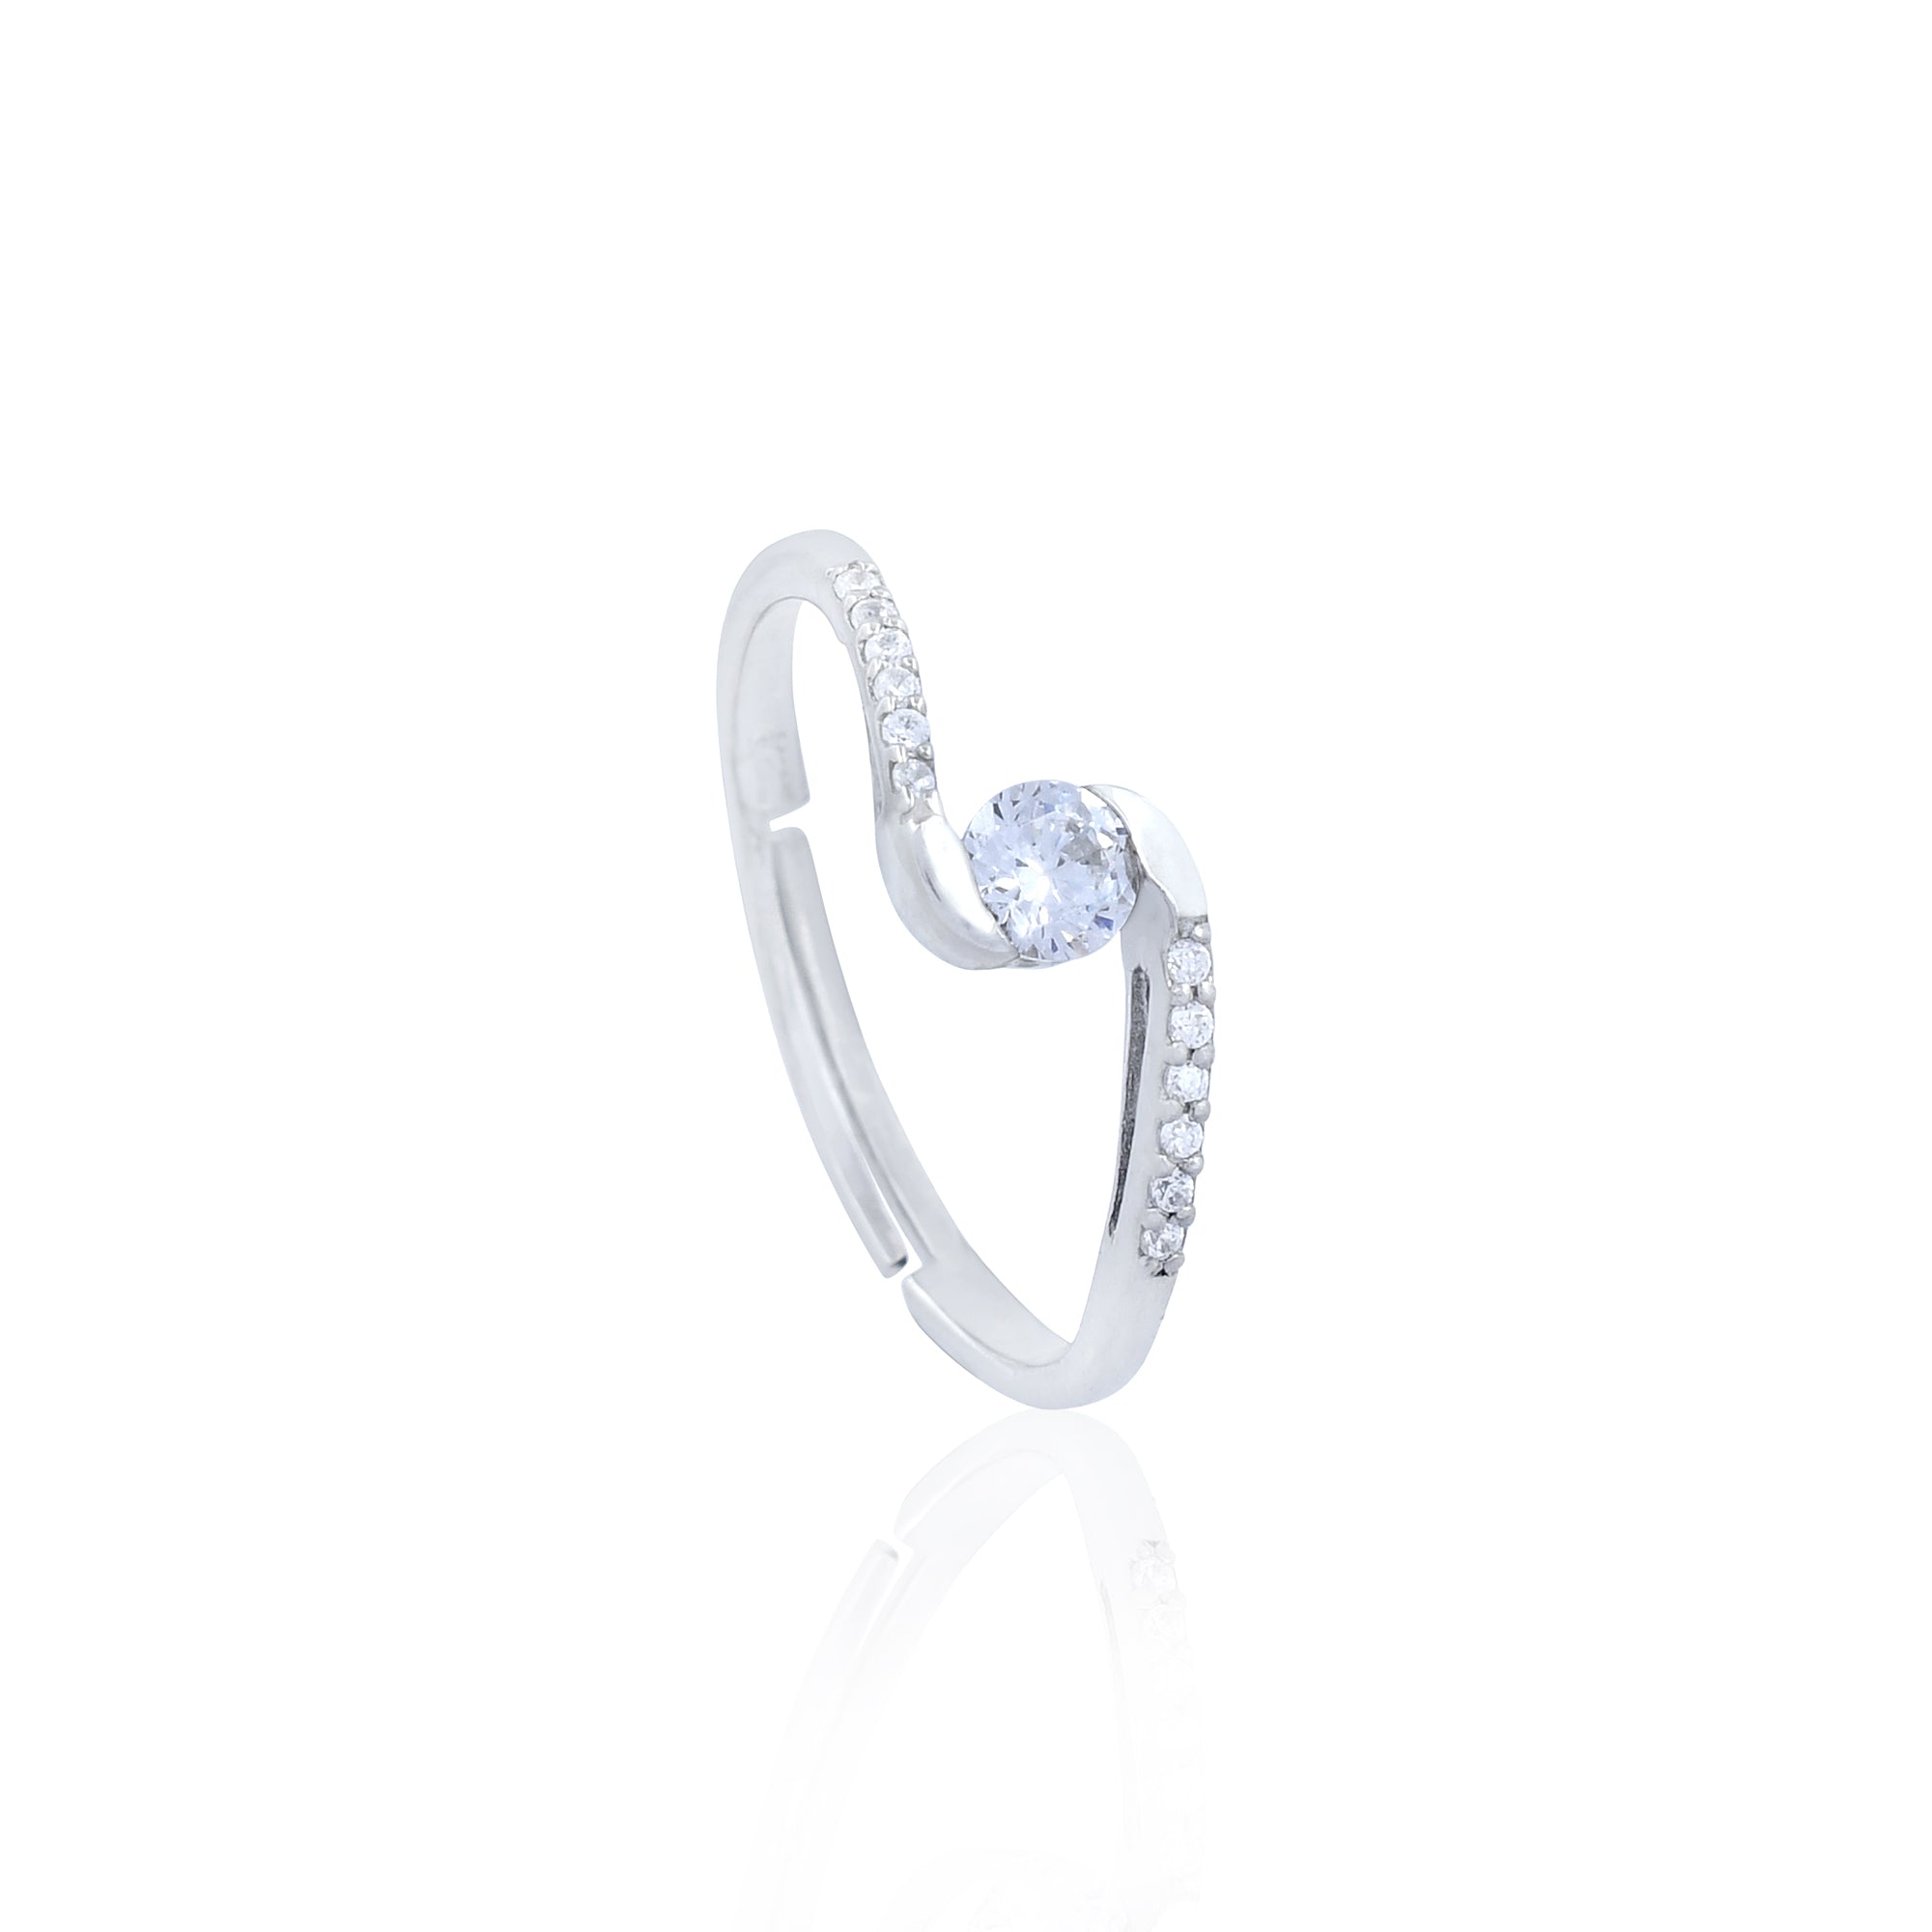 Sparkly Solitare 925 Silver Ring